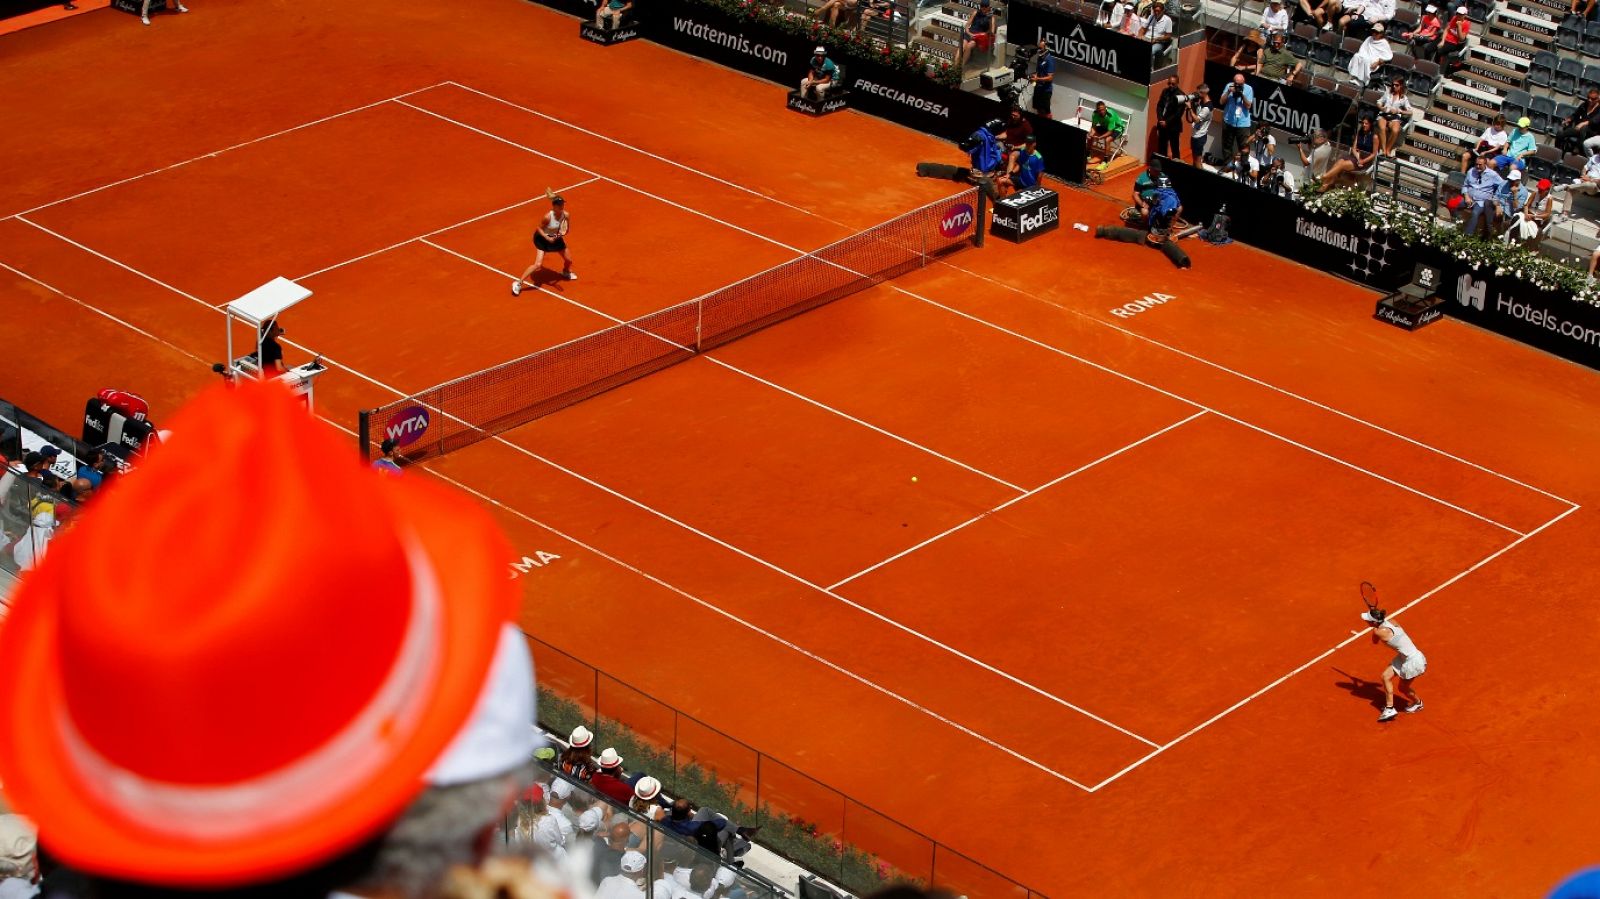 Tenis - WTA Torneo Roma. Final: S. Halep - E. Svitolina